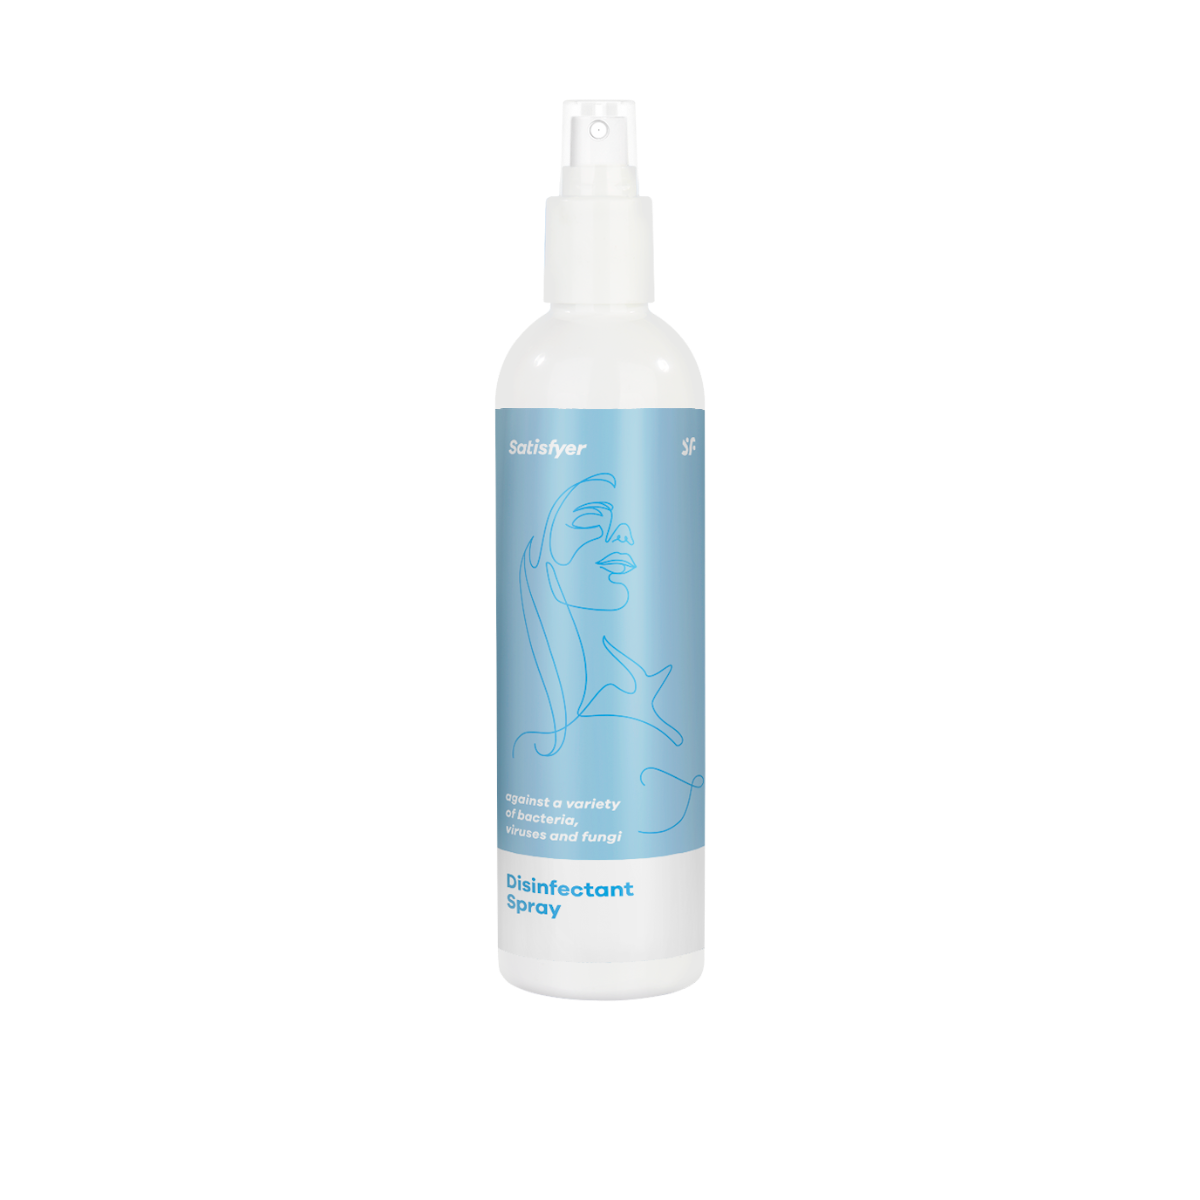 Satisfyer-Women-Disinfectant-Spray